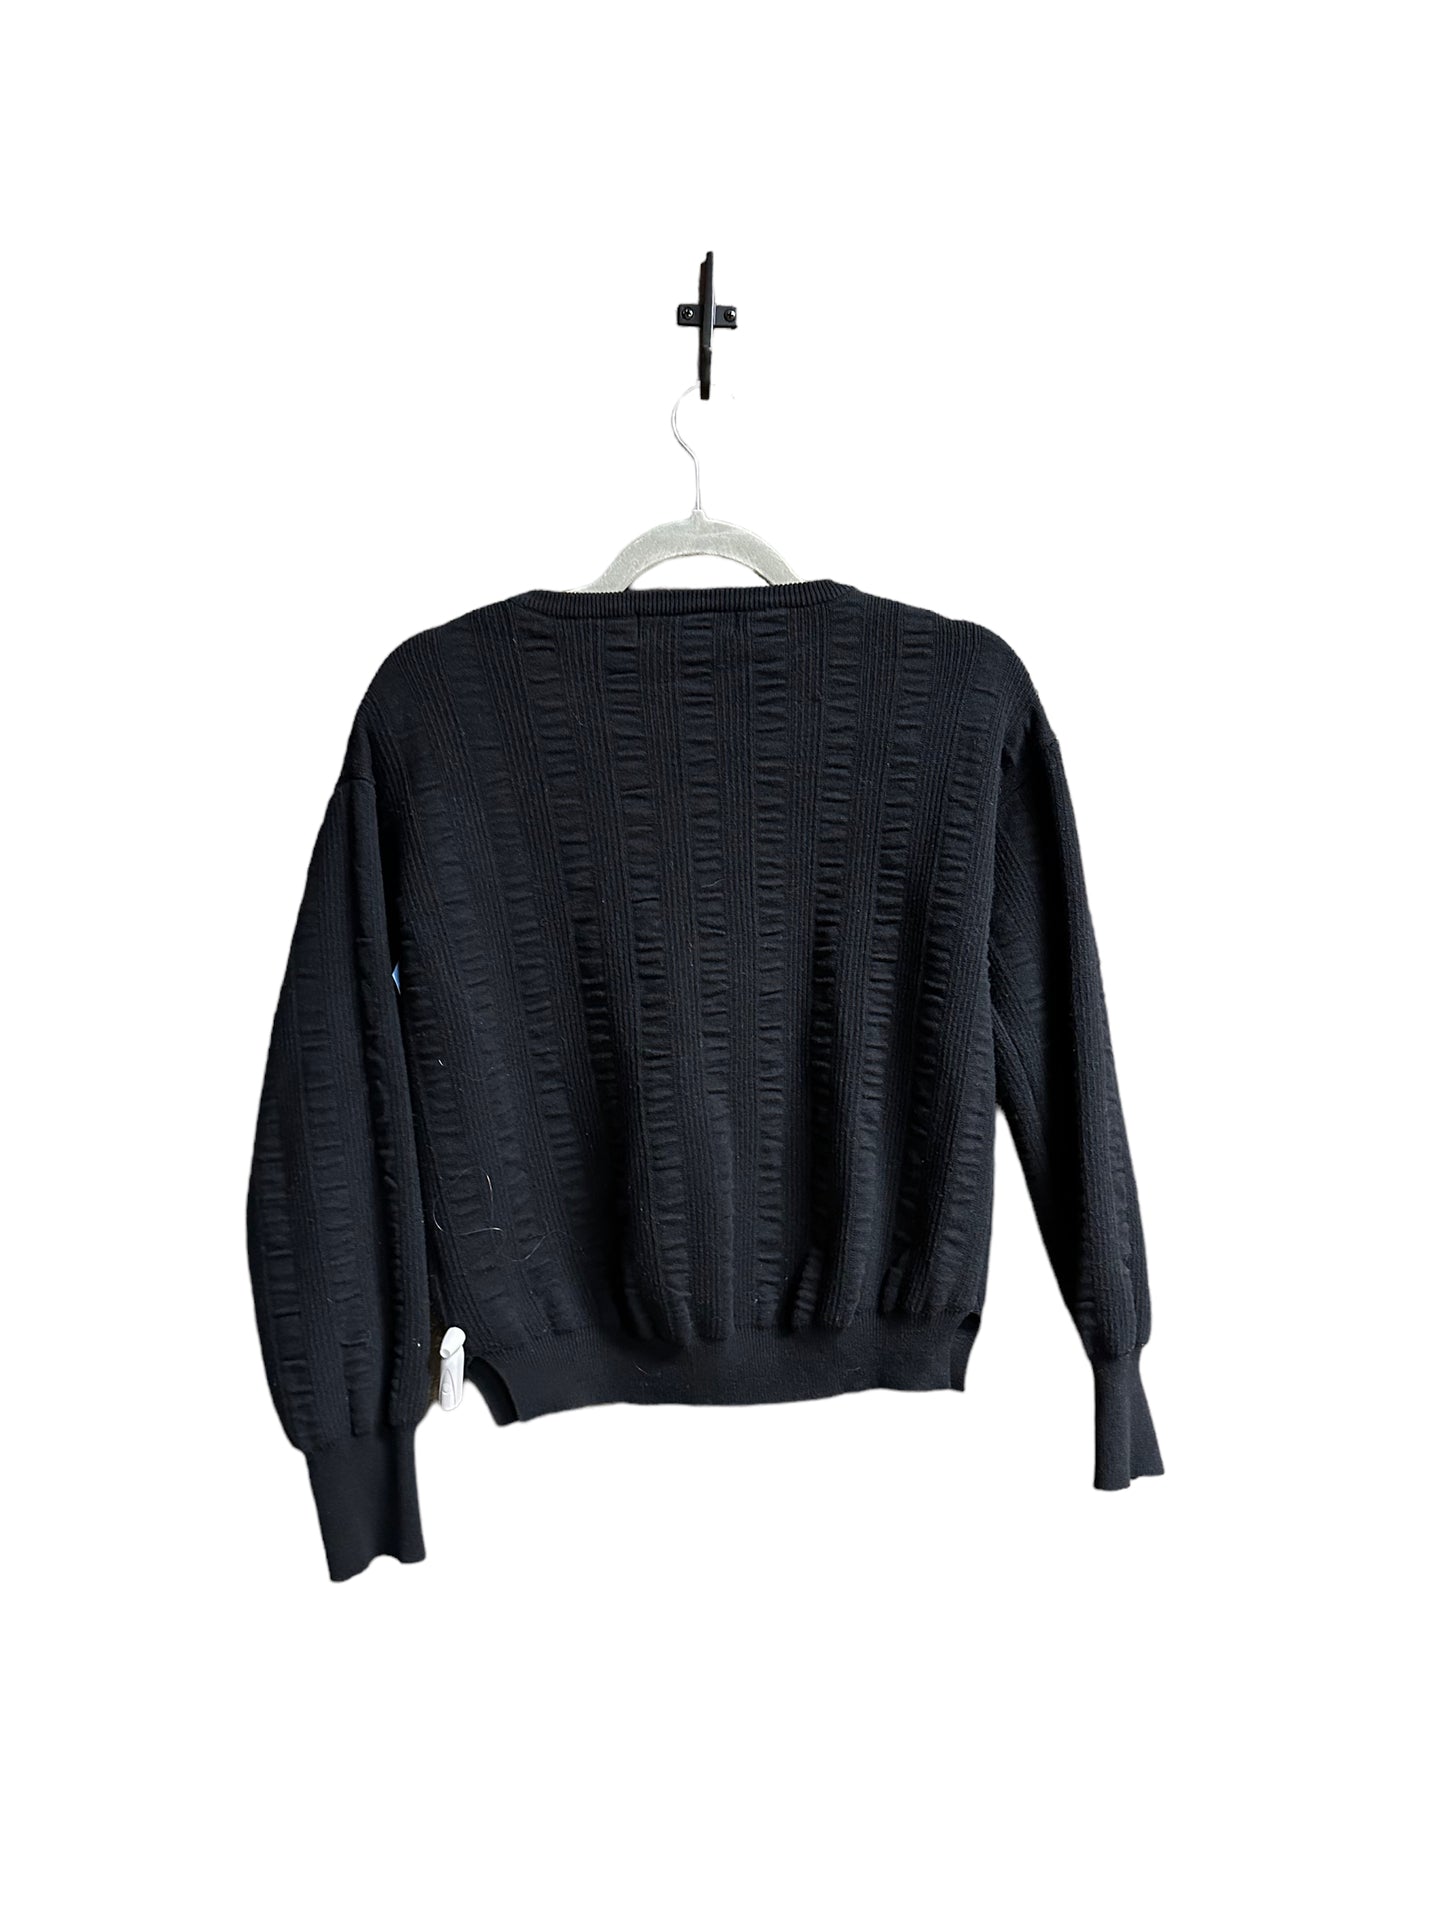 Sweater By Sam Edelman  Size: M